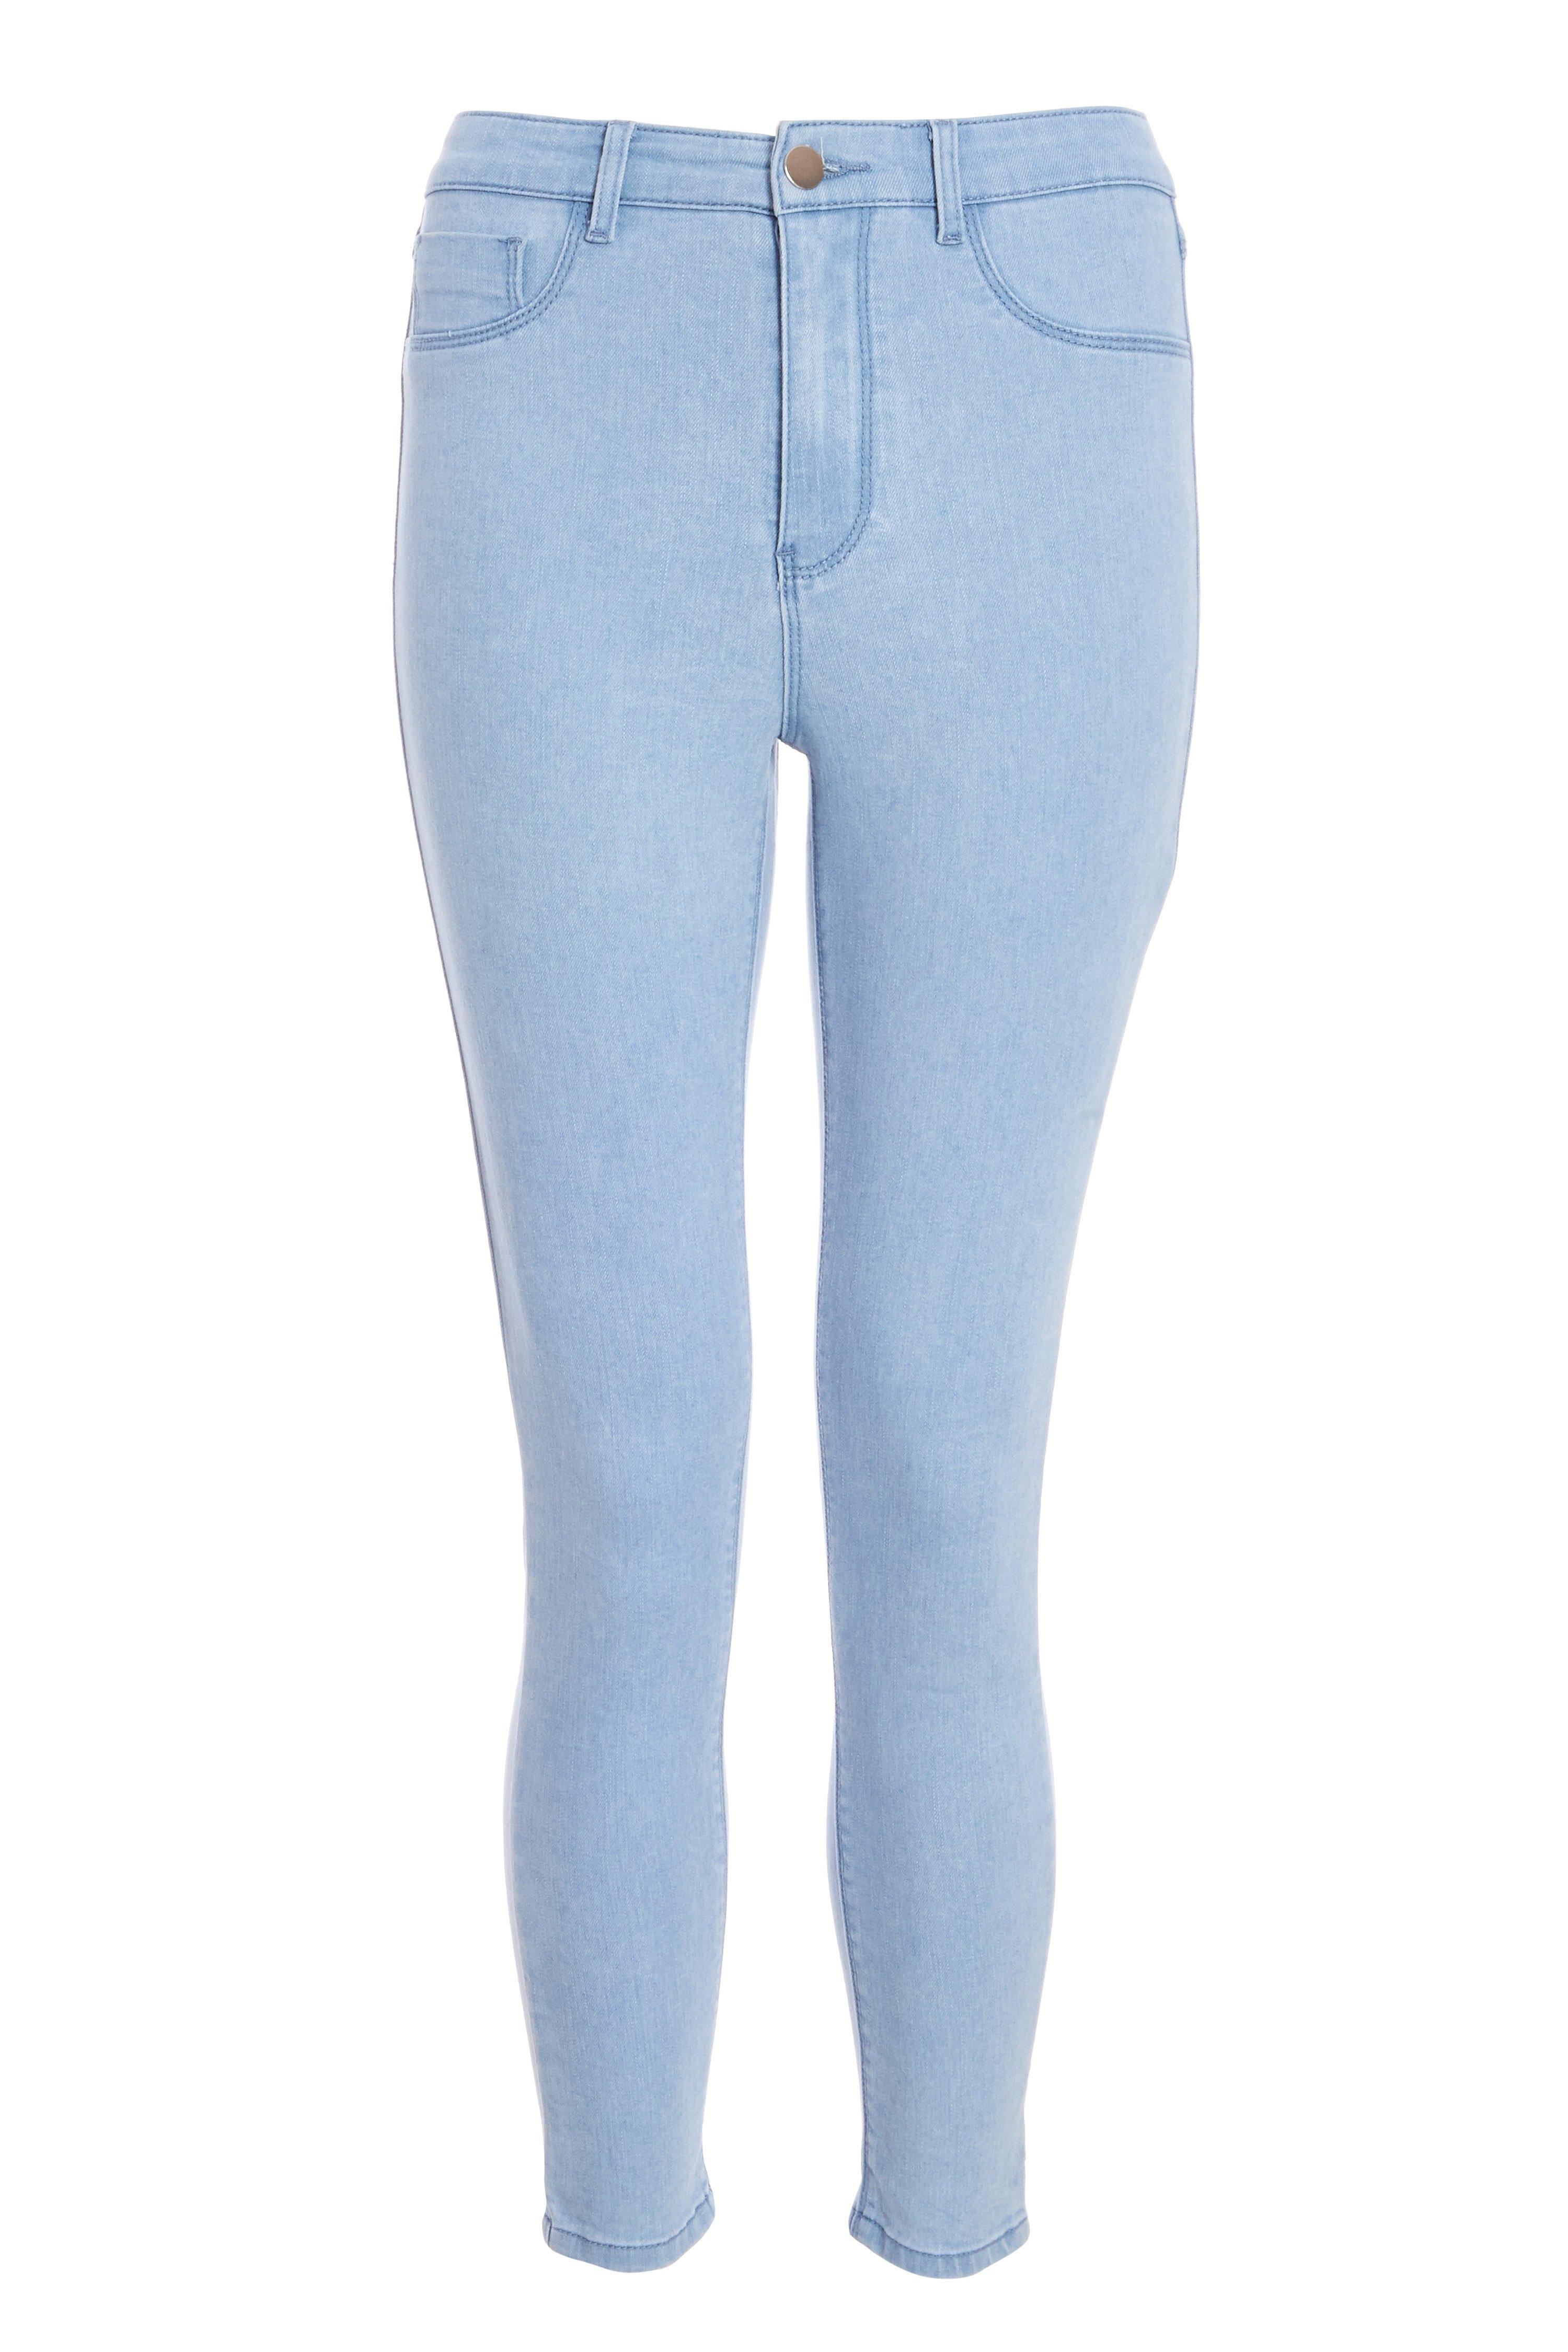 Petite Light Blue Denim High Waist Jeans - Quiz Clothing